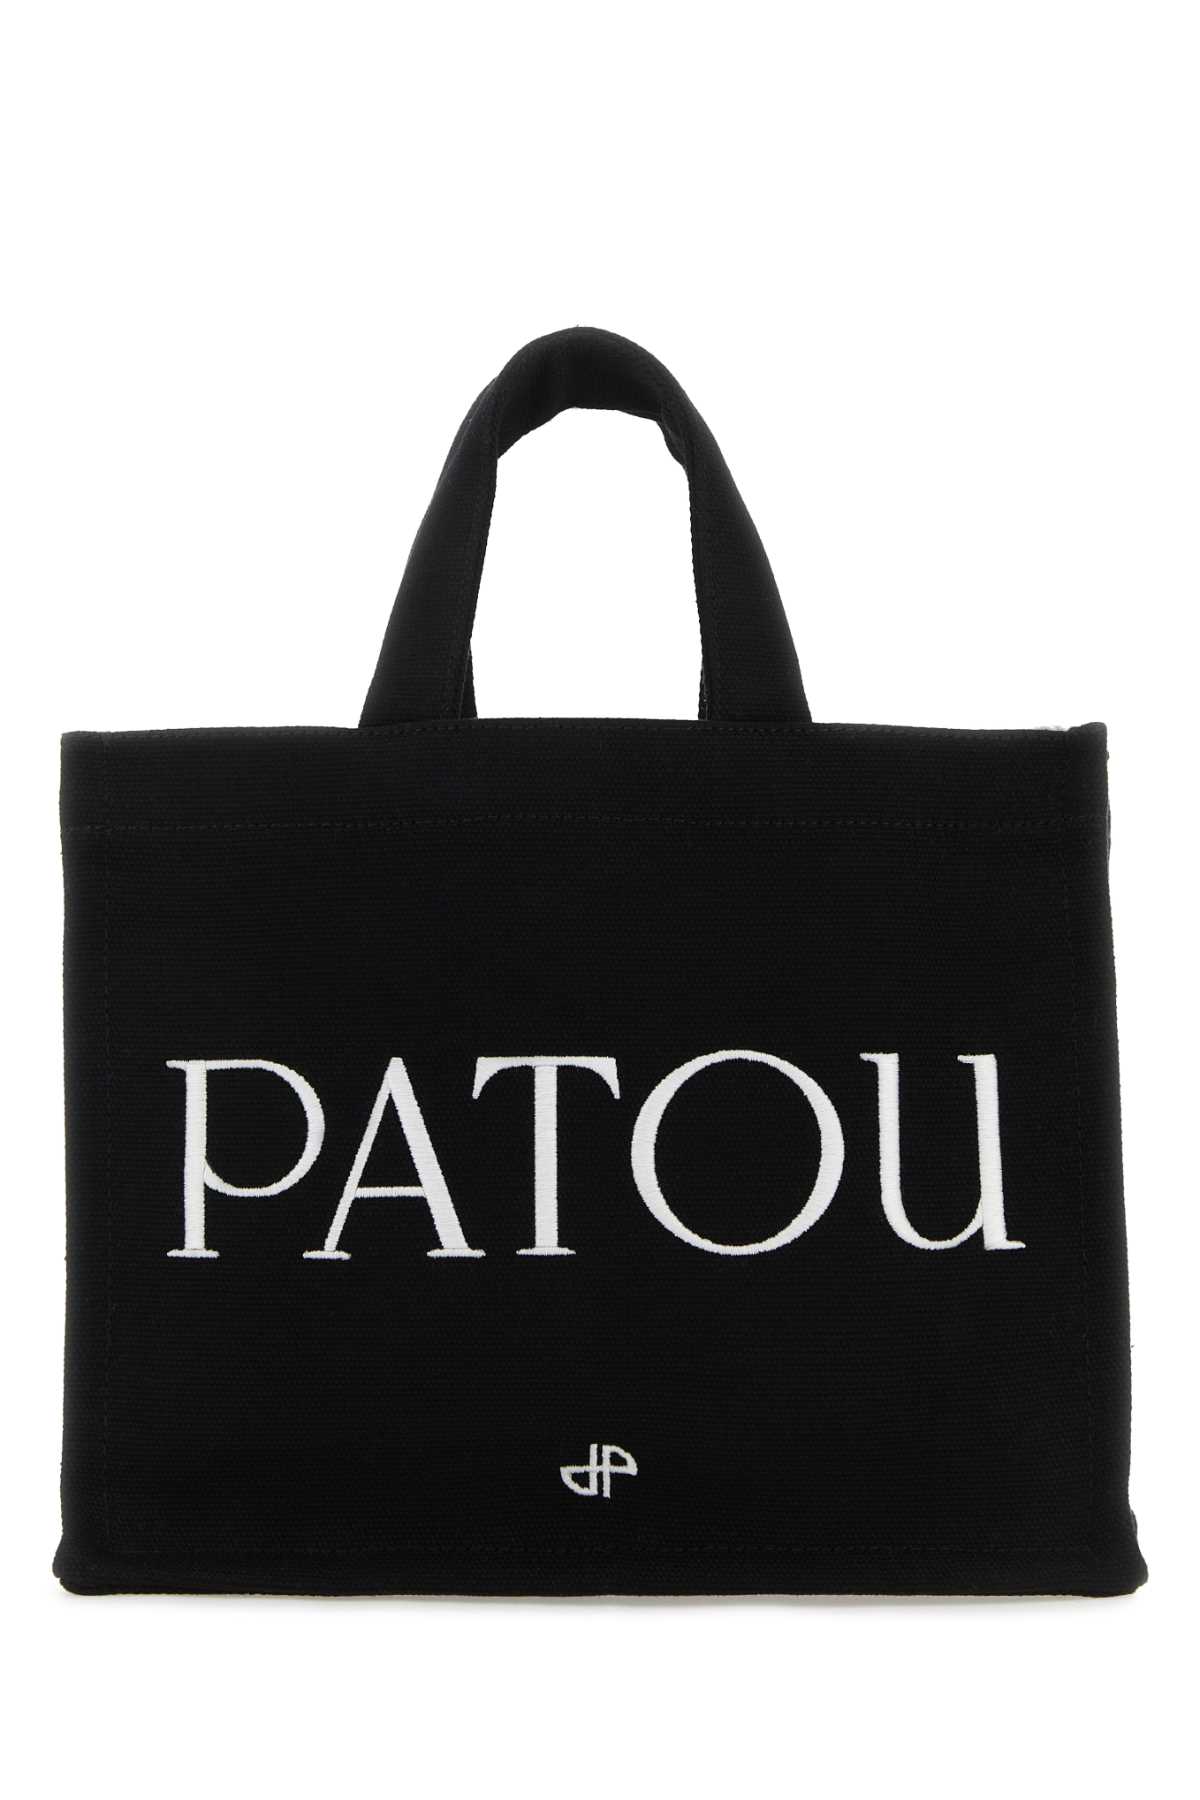 Patou Black Canvas Small Tote  Shopping Bag